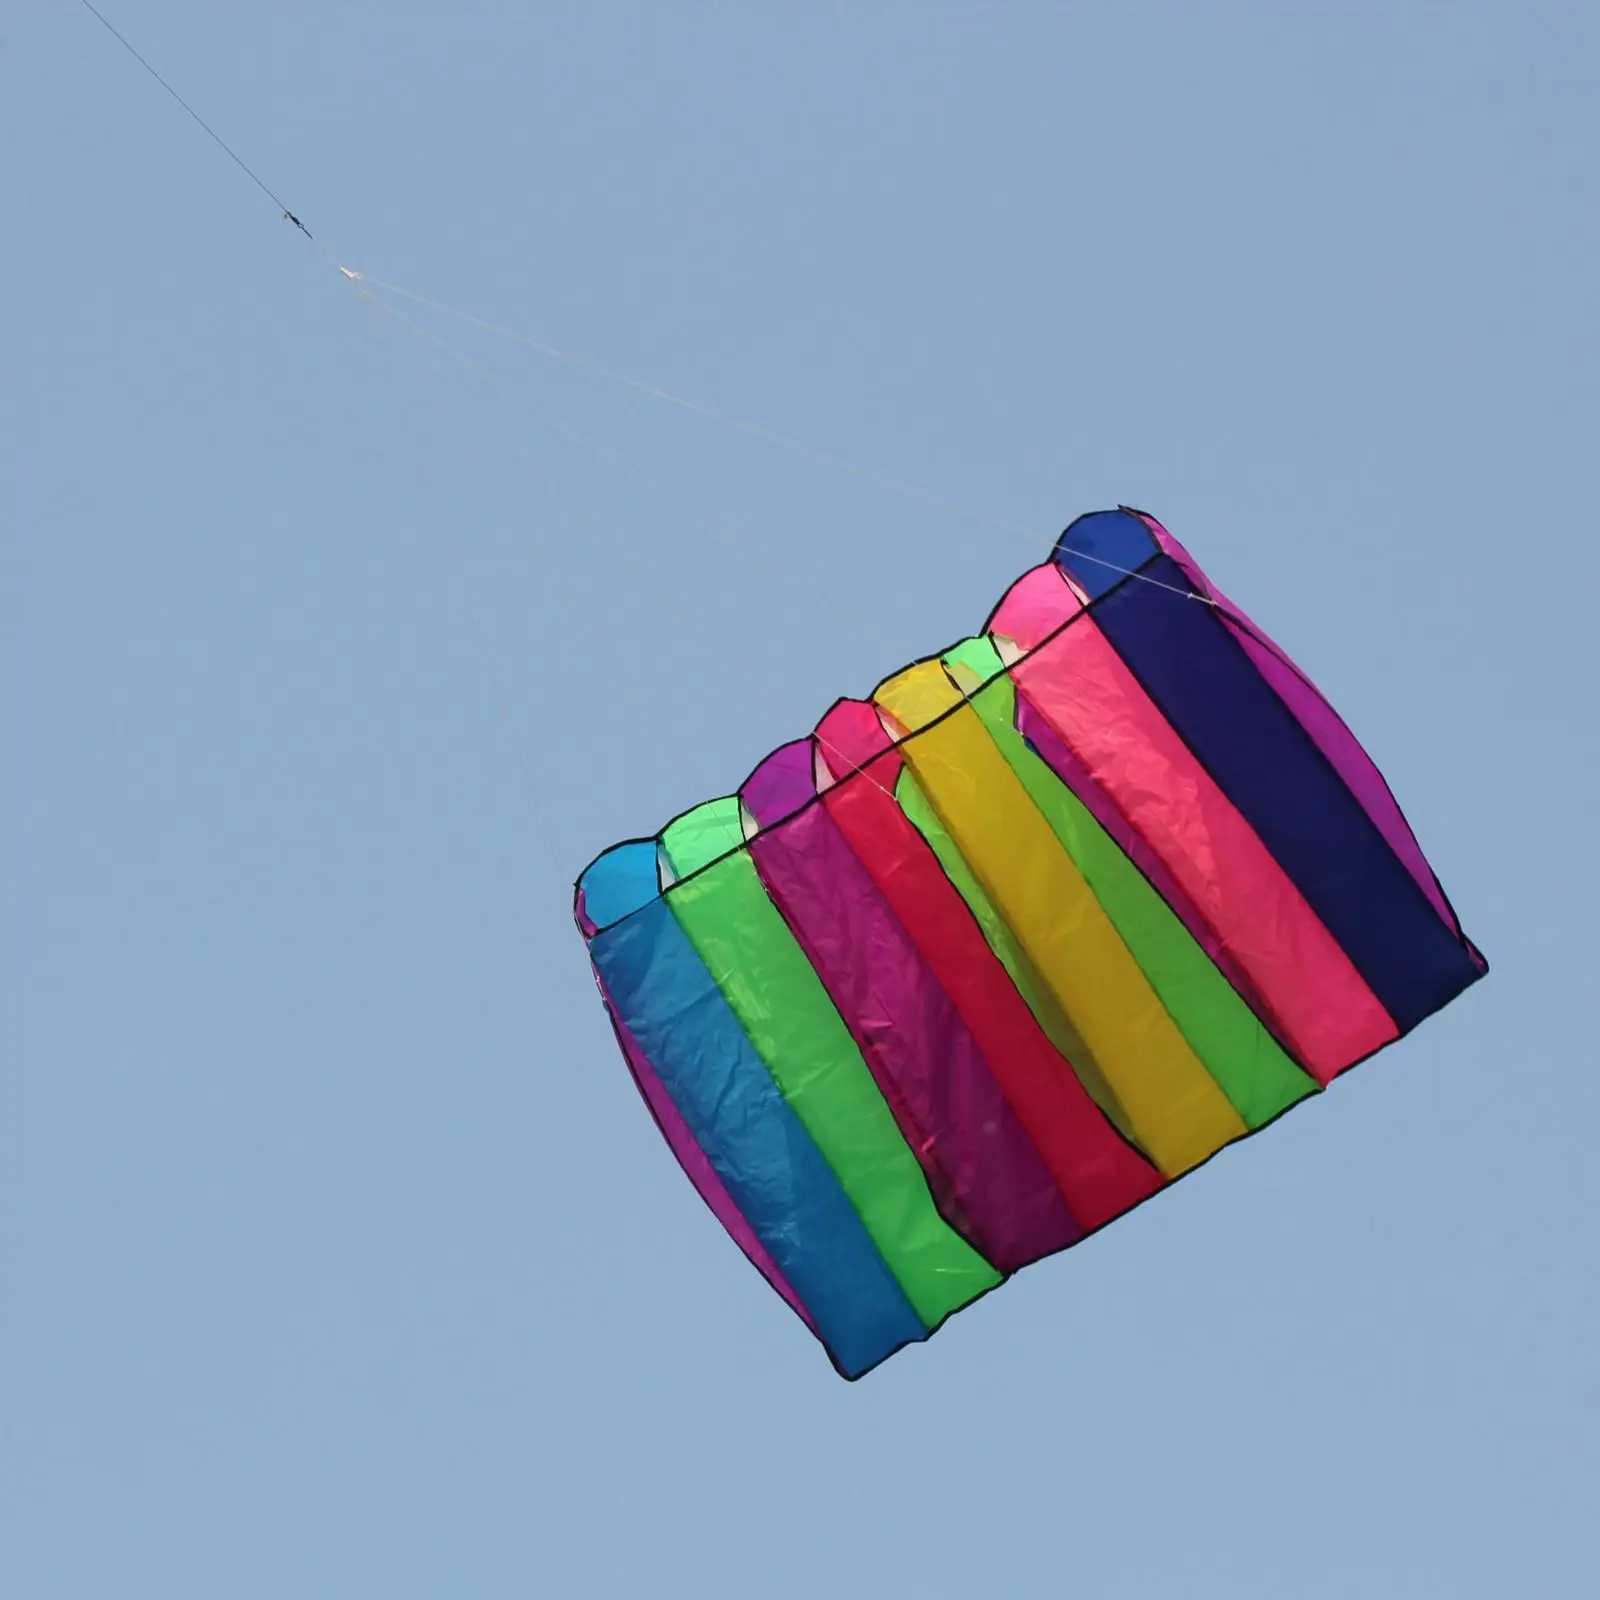 Single Line Kites Large Rainbow Kite for Boys Girls Beach Trip Backyard